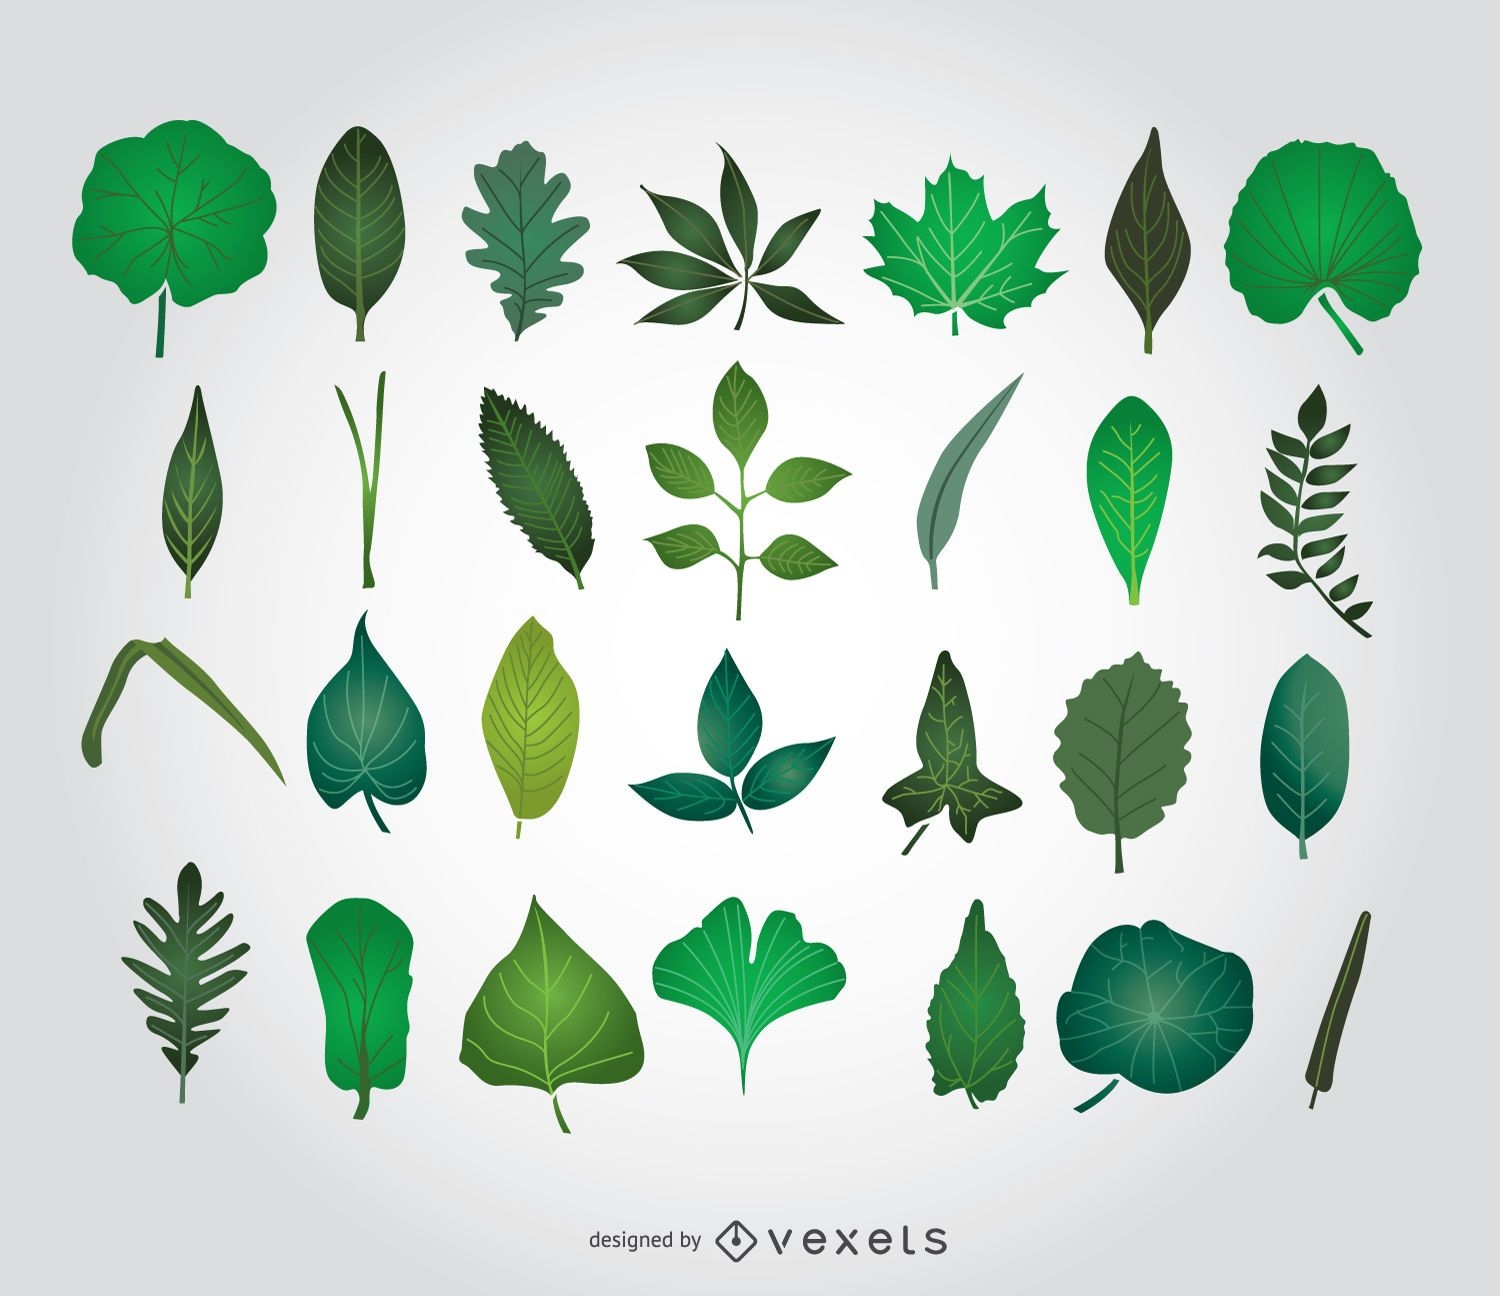 Green Leaves illustrations 